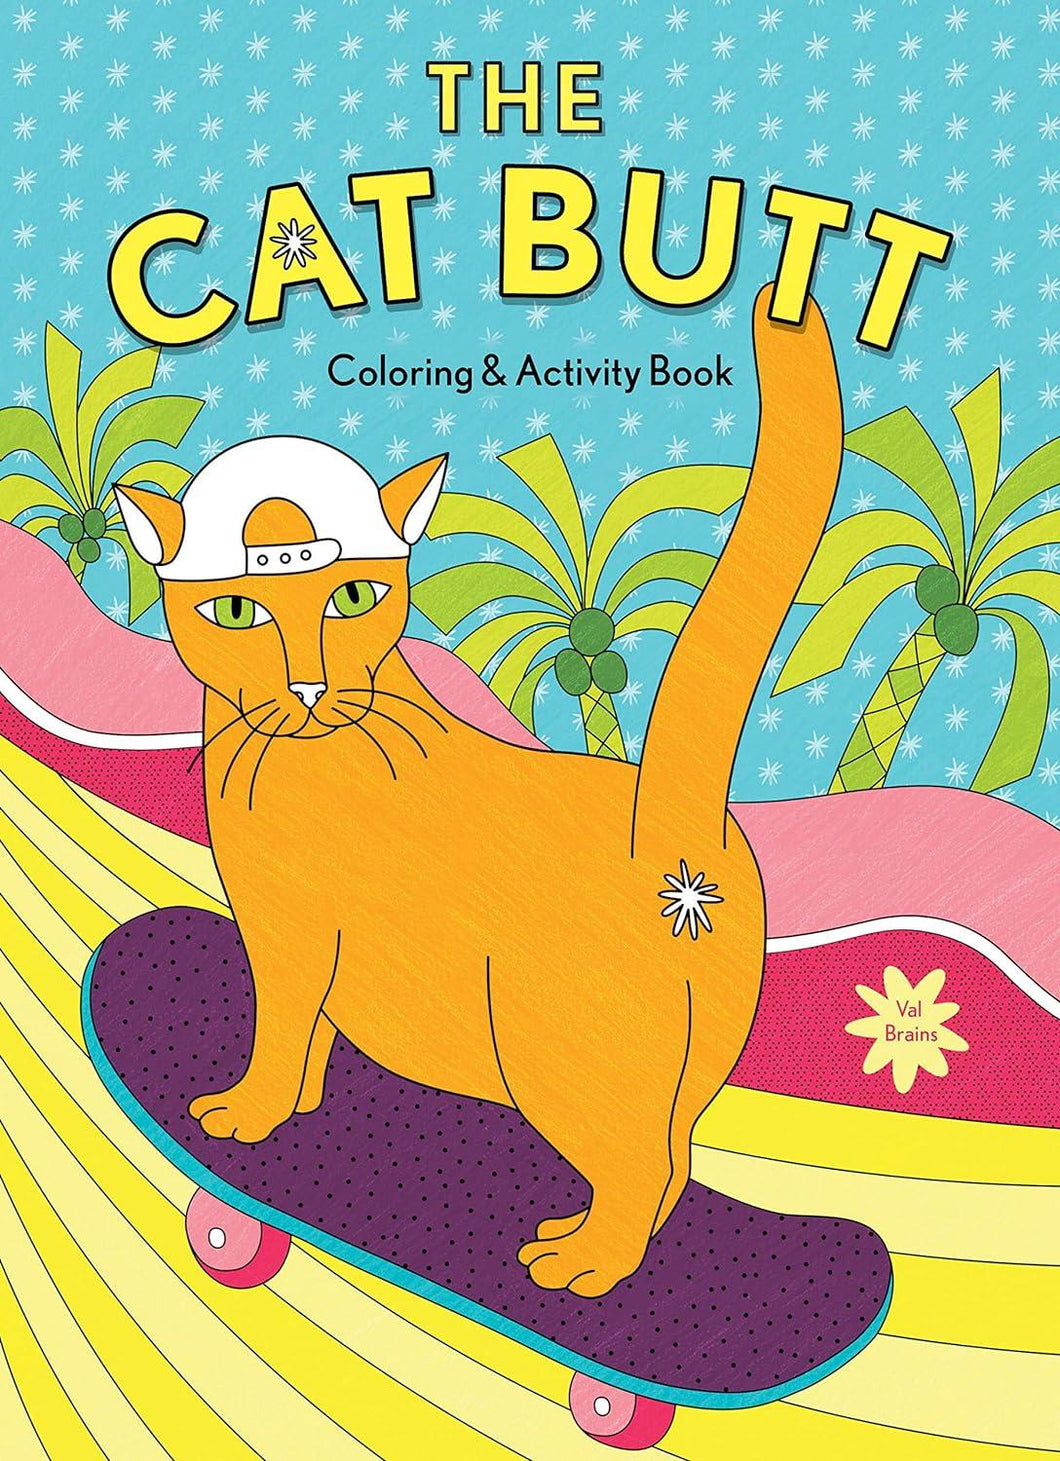 Cat Butt Coloring & Activity Book